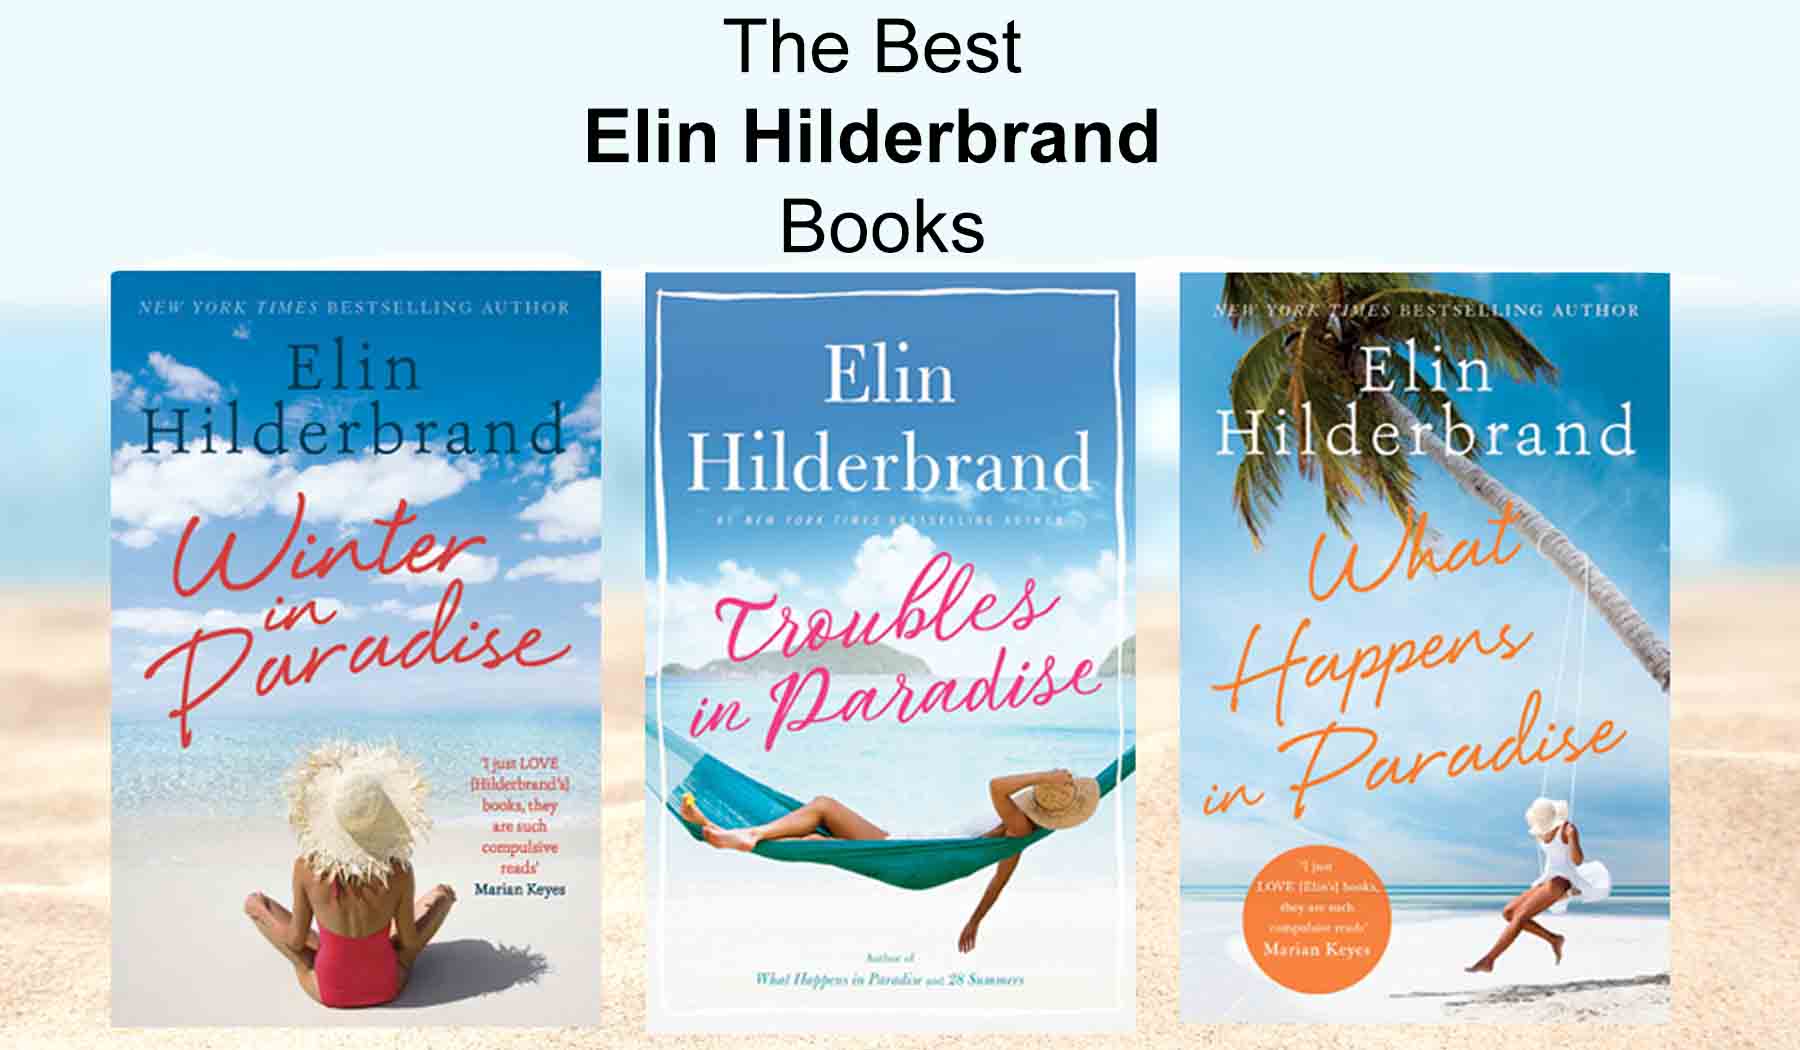 The Best Elin Hilderbrand Books